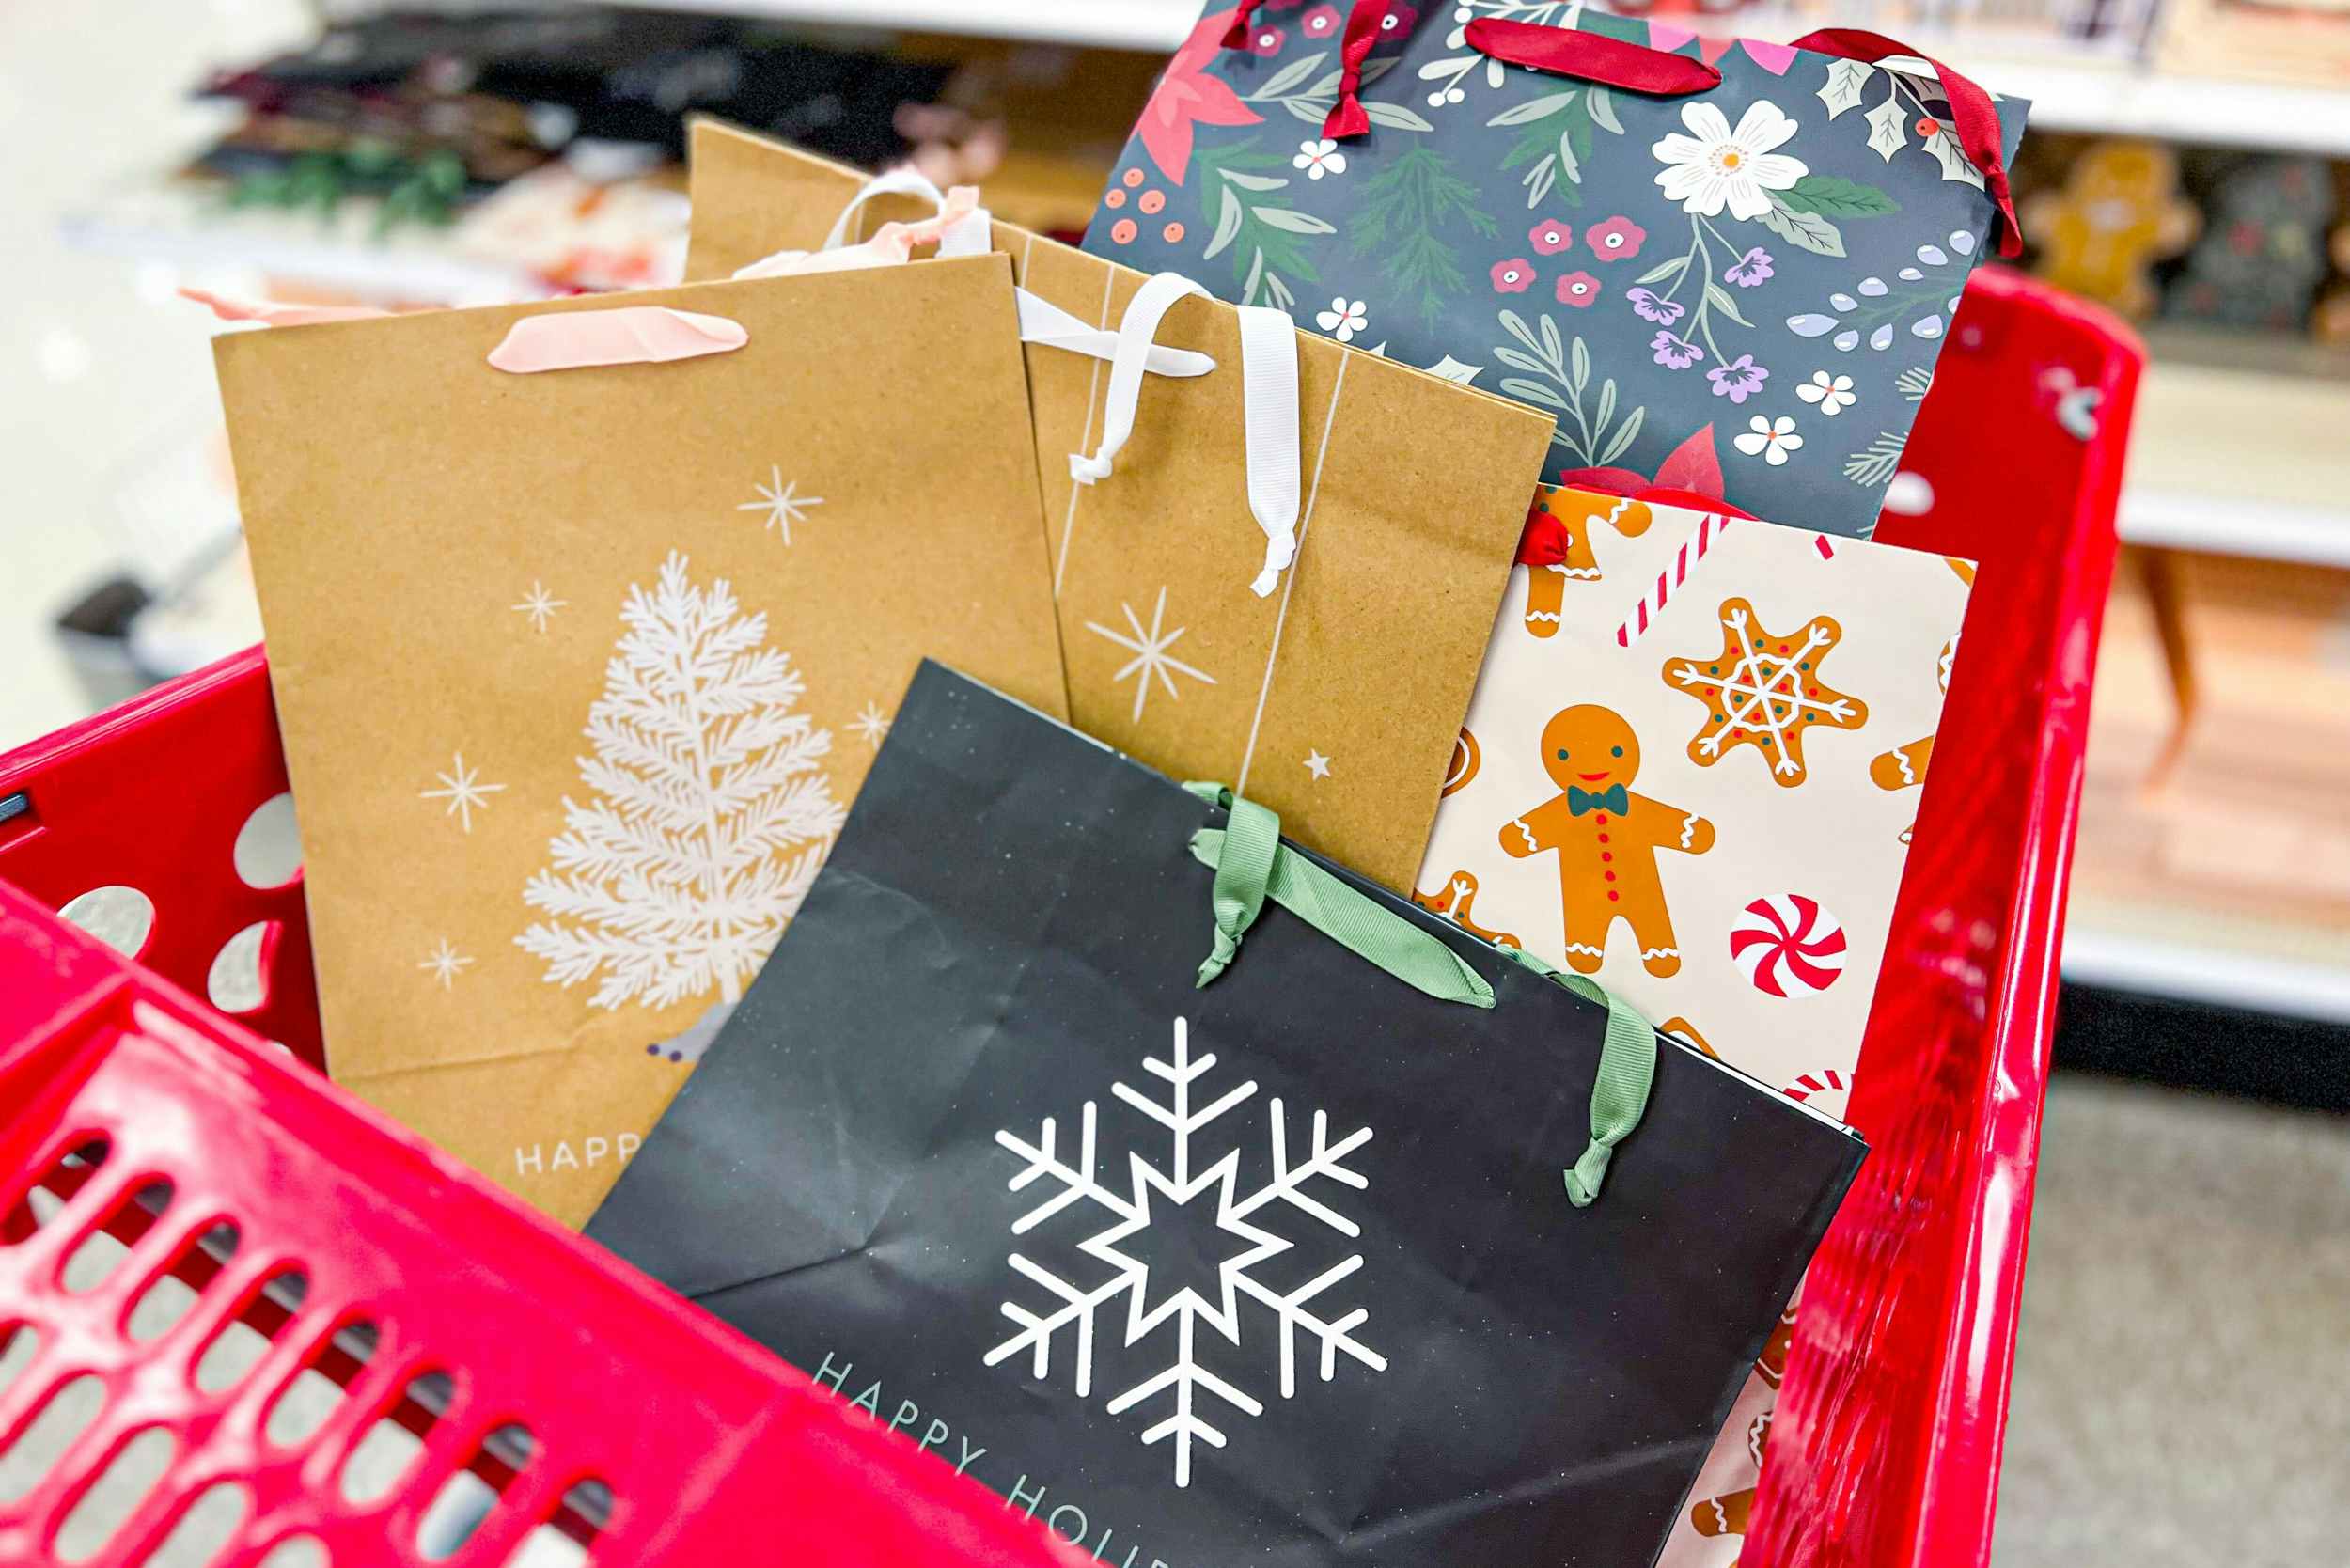 holiday gift bags at Target